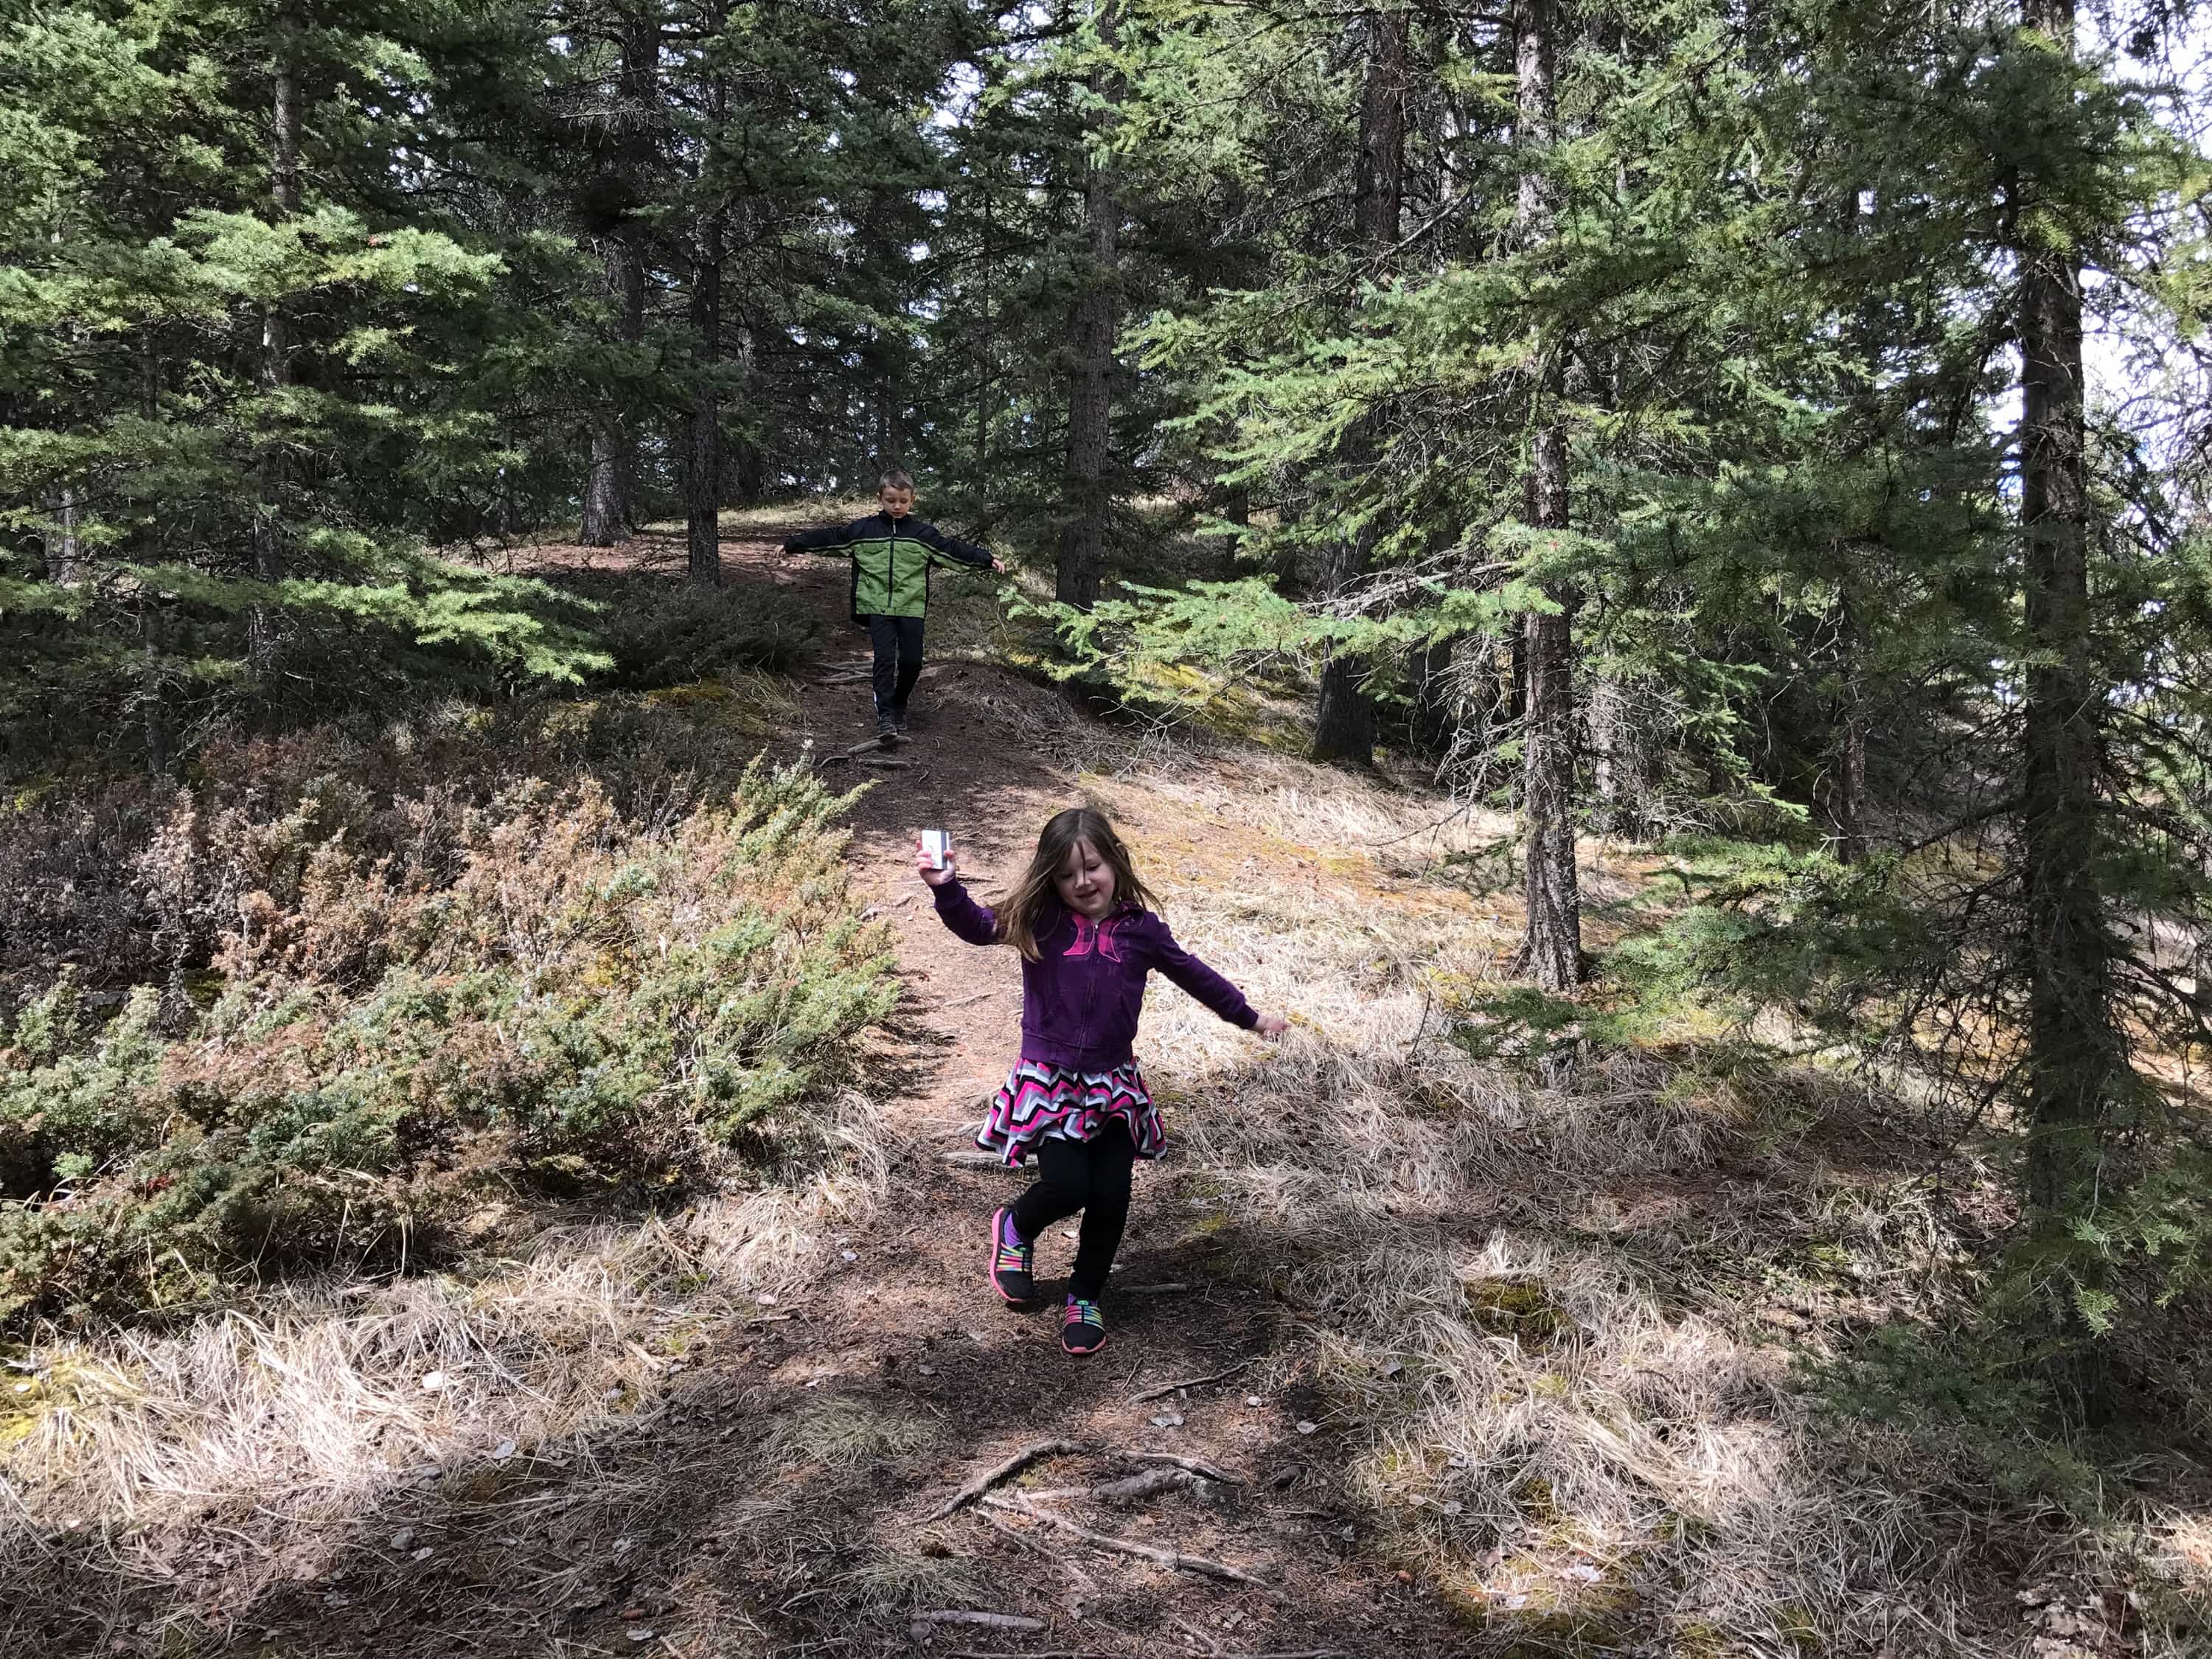 C & S Hiking in Banff